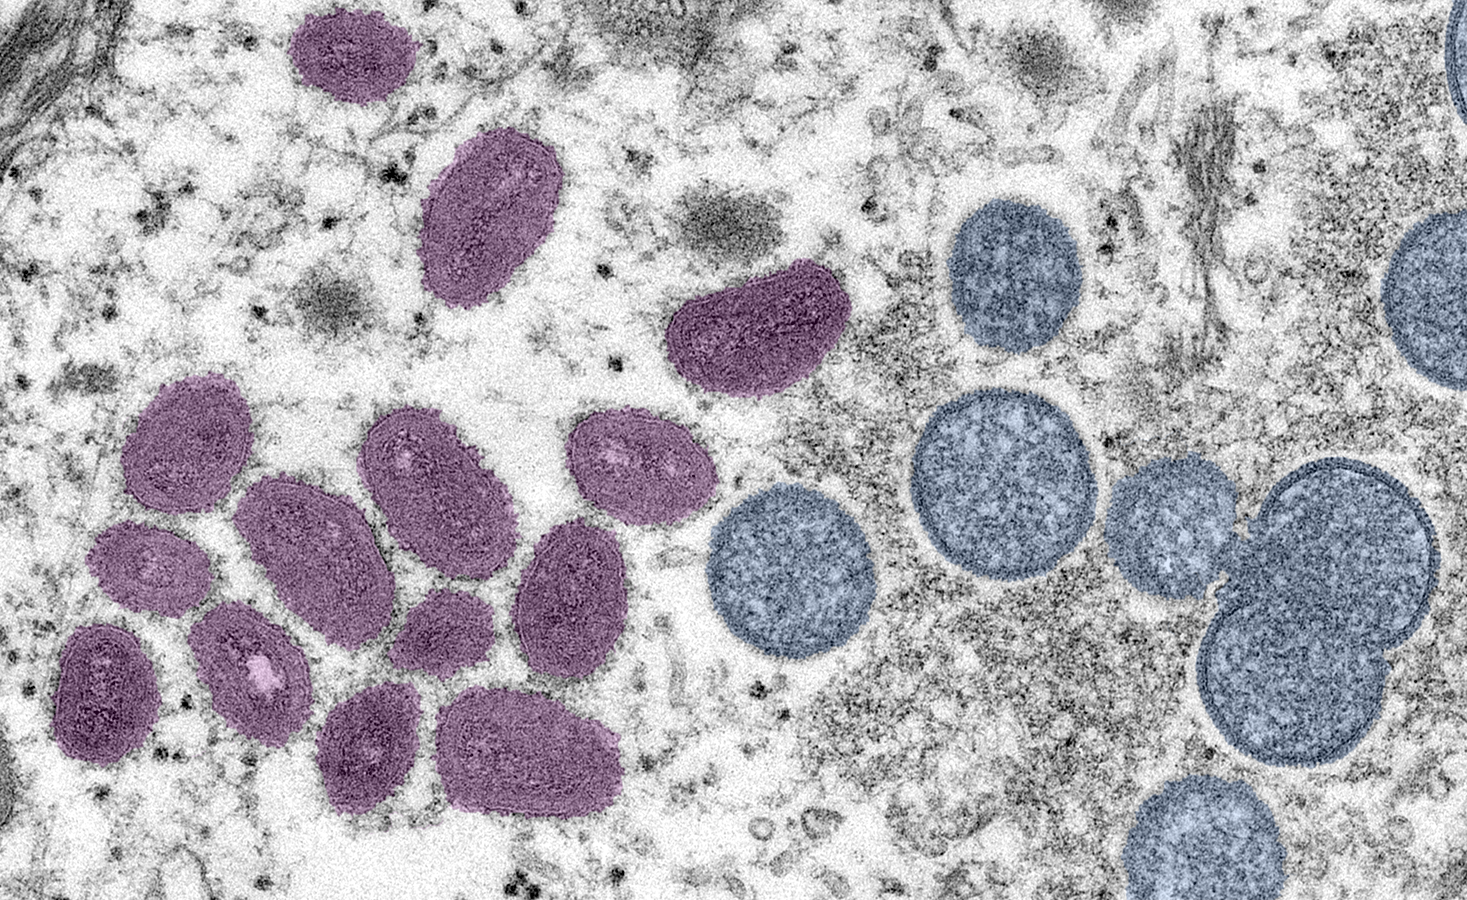 Identifying Monkeypox Viral DNA in Bodily Fluid Samples